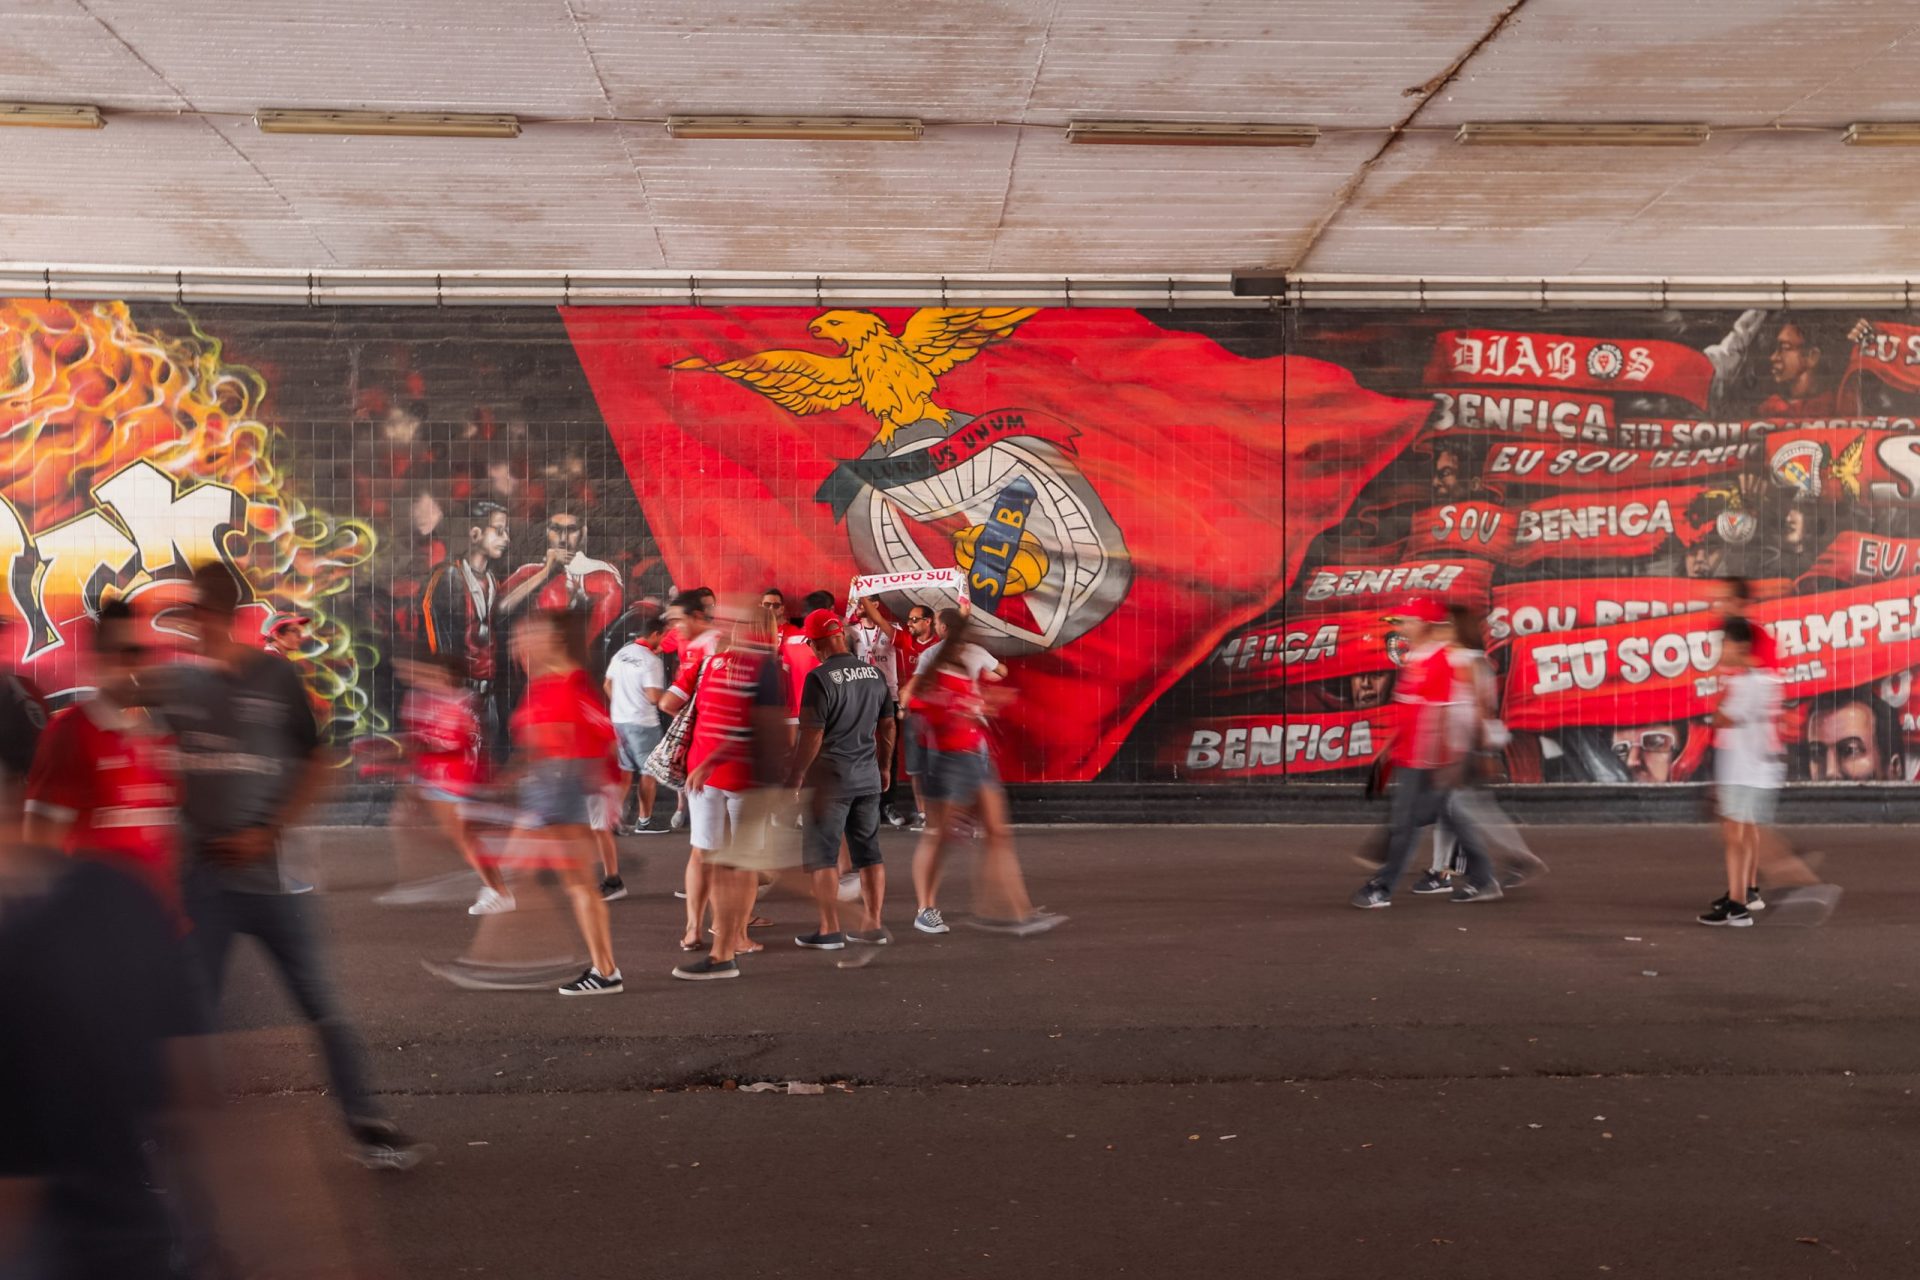 Clássico. Benfica paga 765 euros por música da tourada